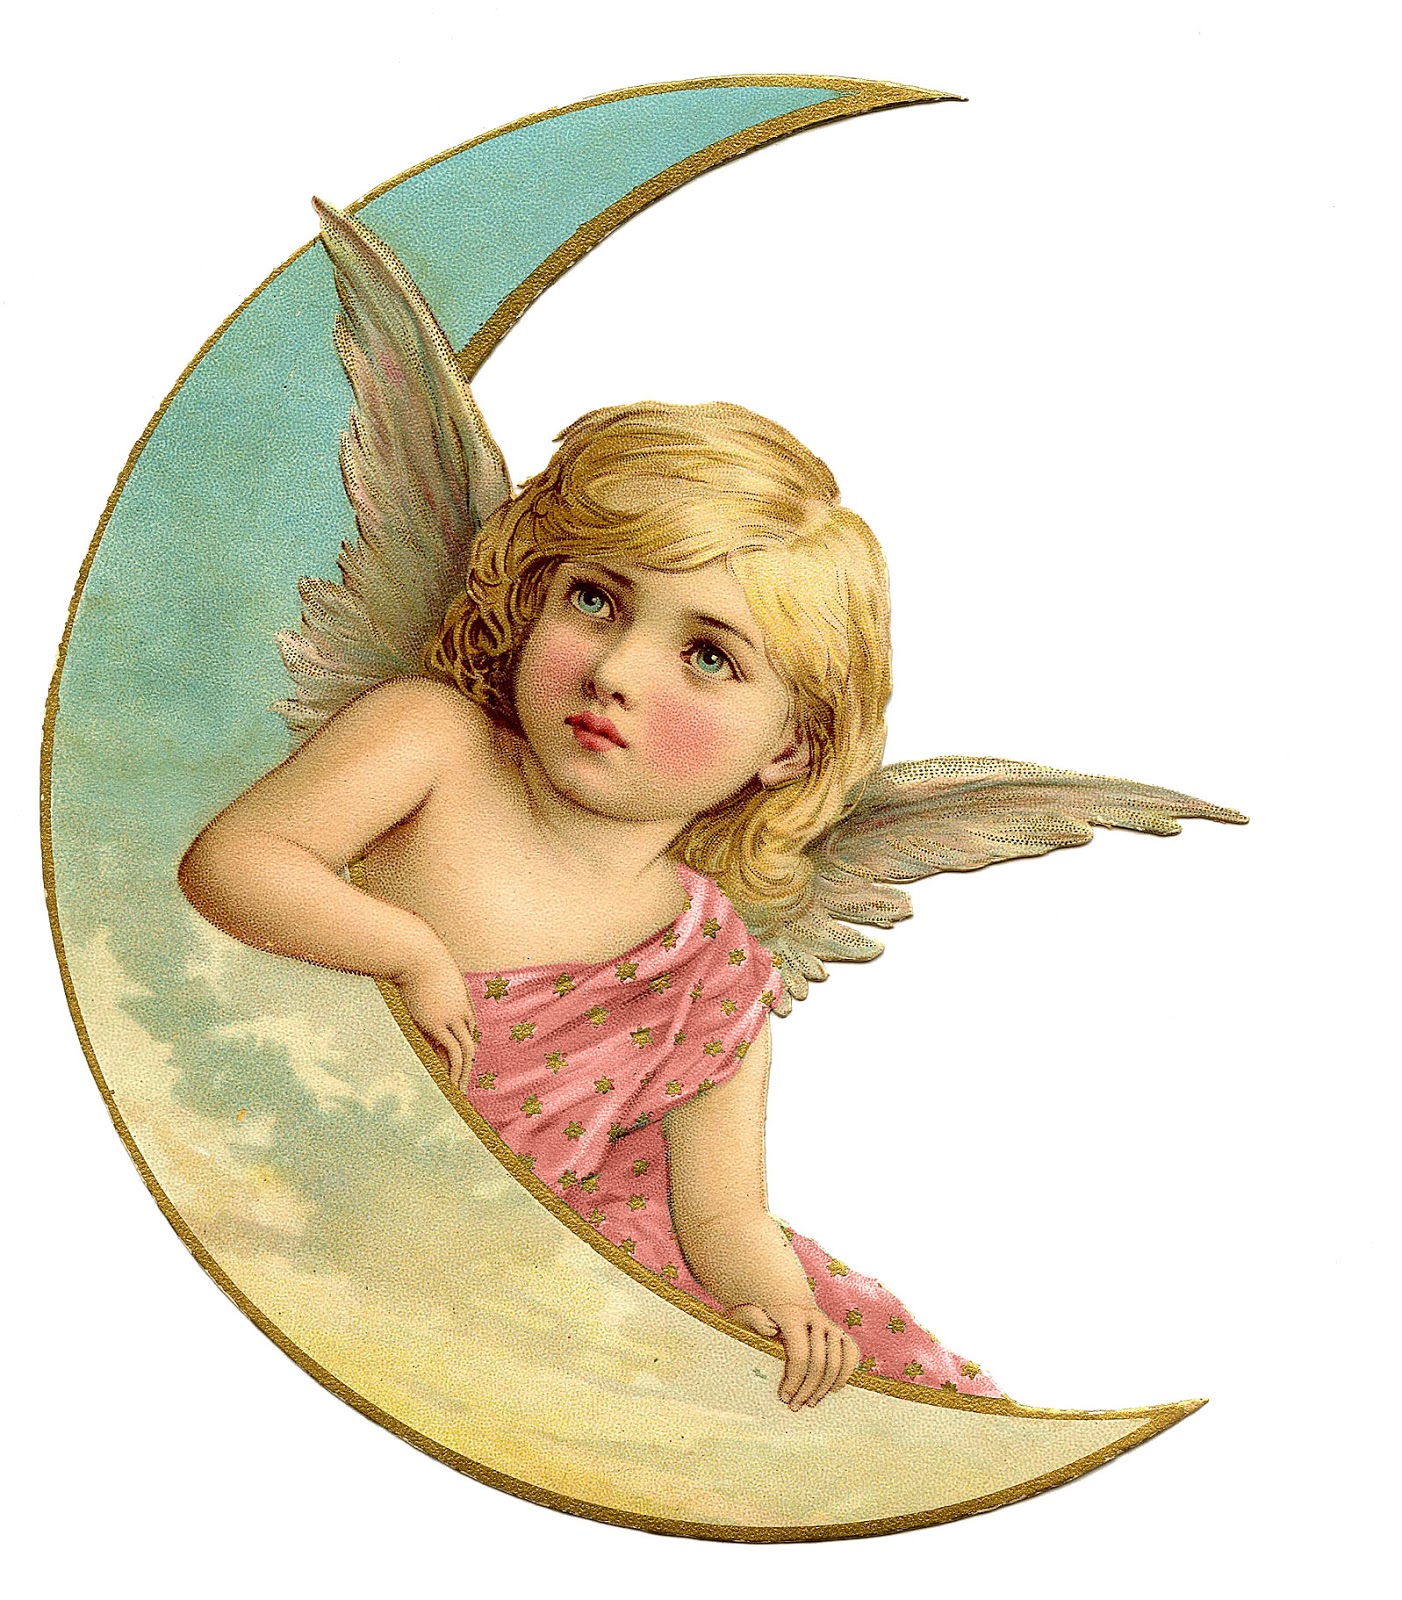 Vintage Christmas Image - Amazing Angel on Moon 2 - The Graphics Fairy